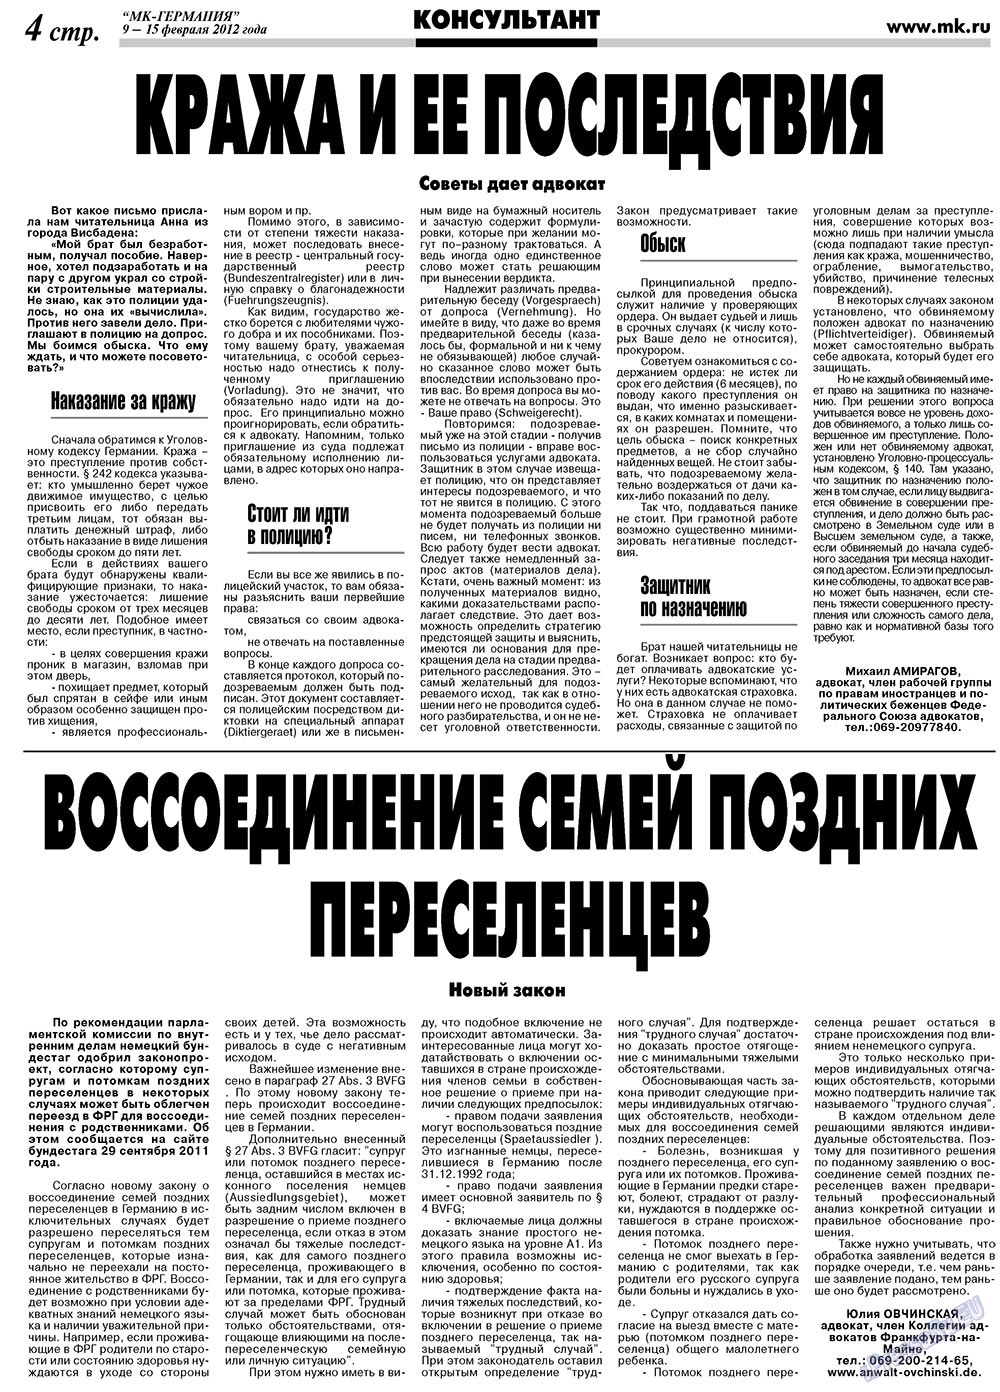 МК-Германия, газета. 2012 №6 стр.4